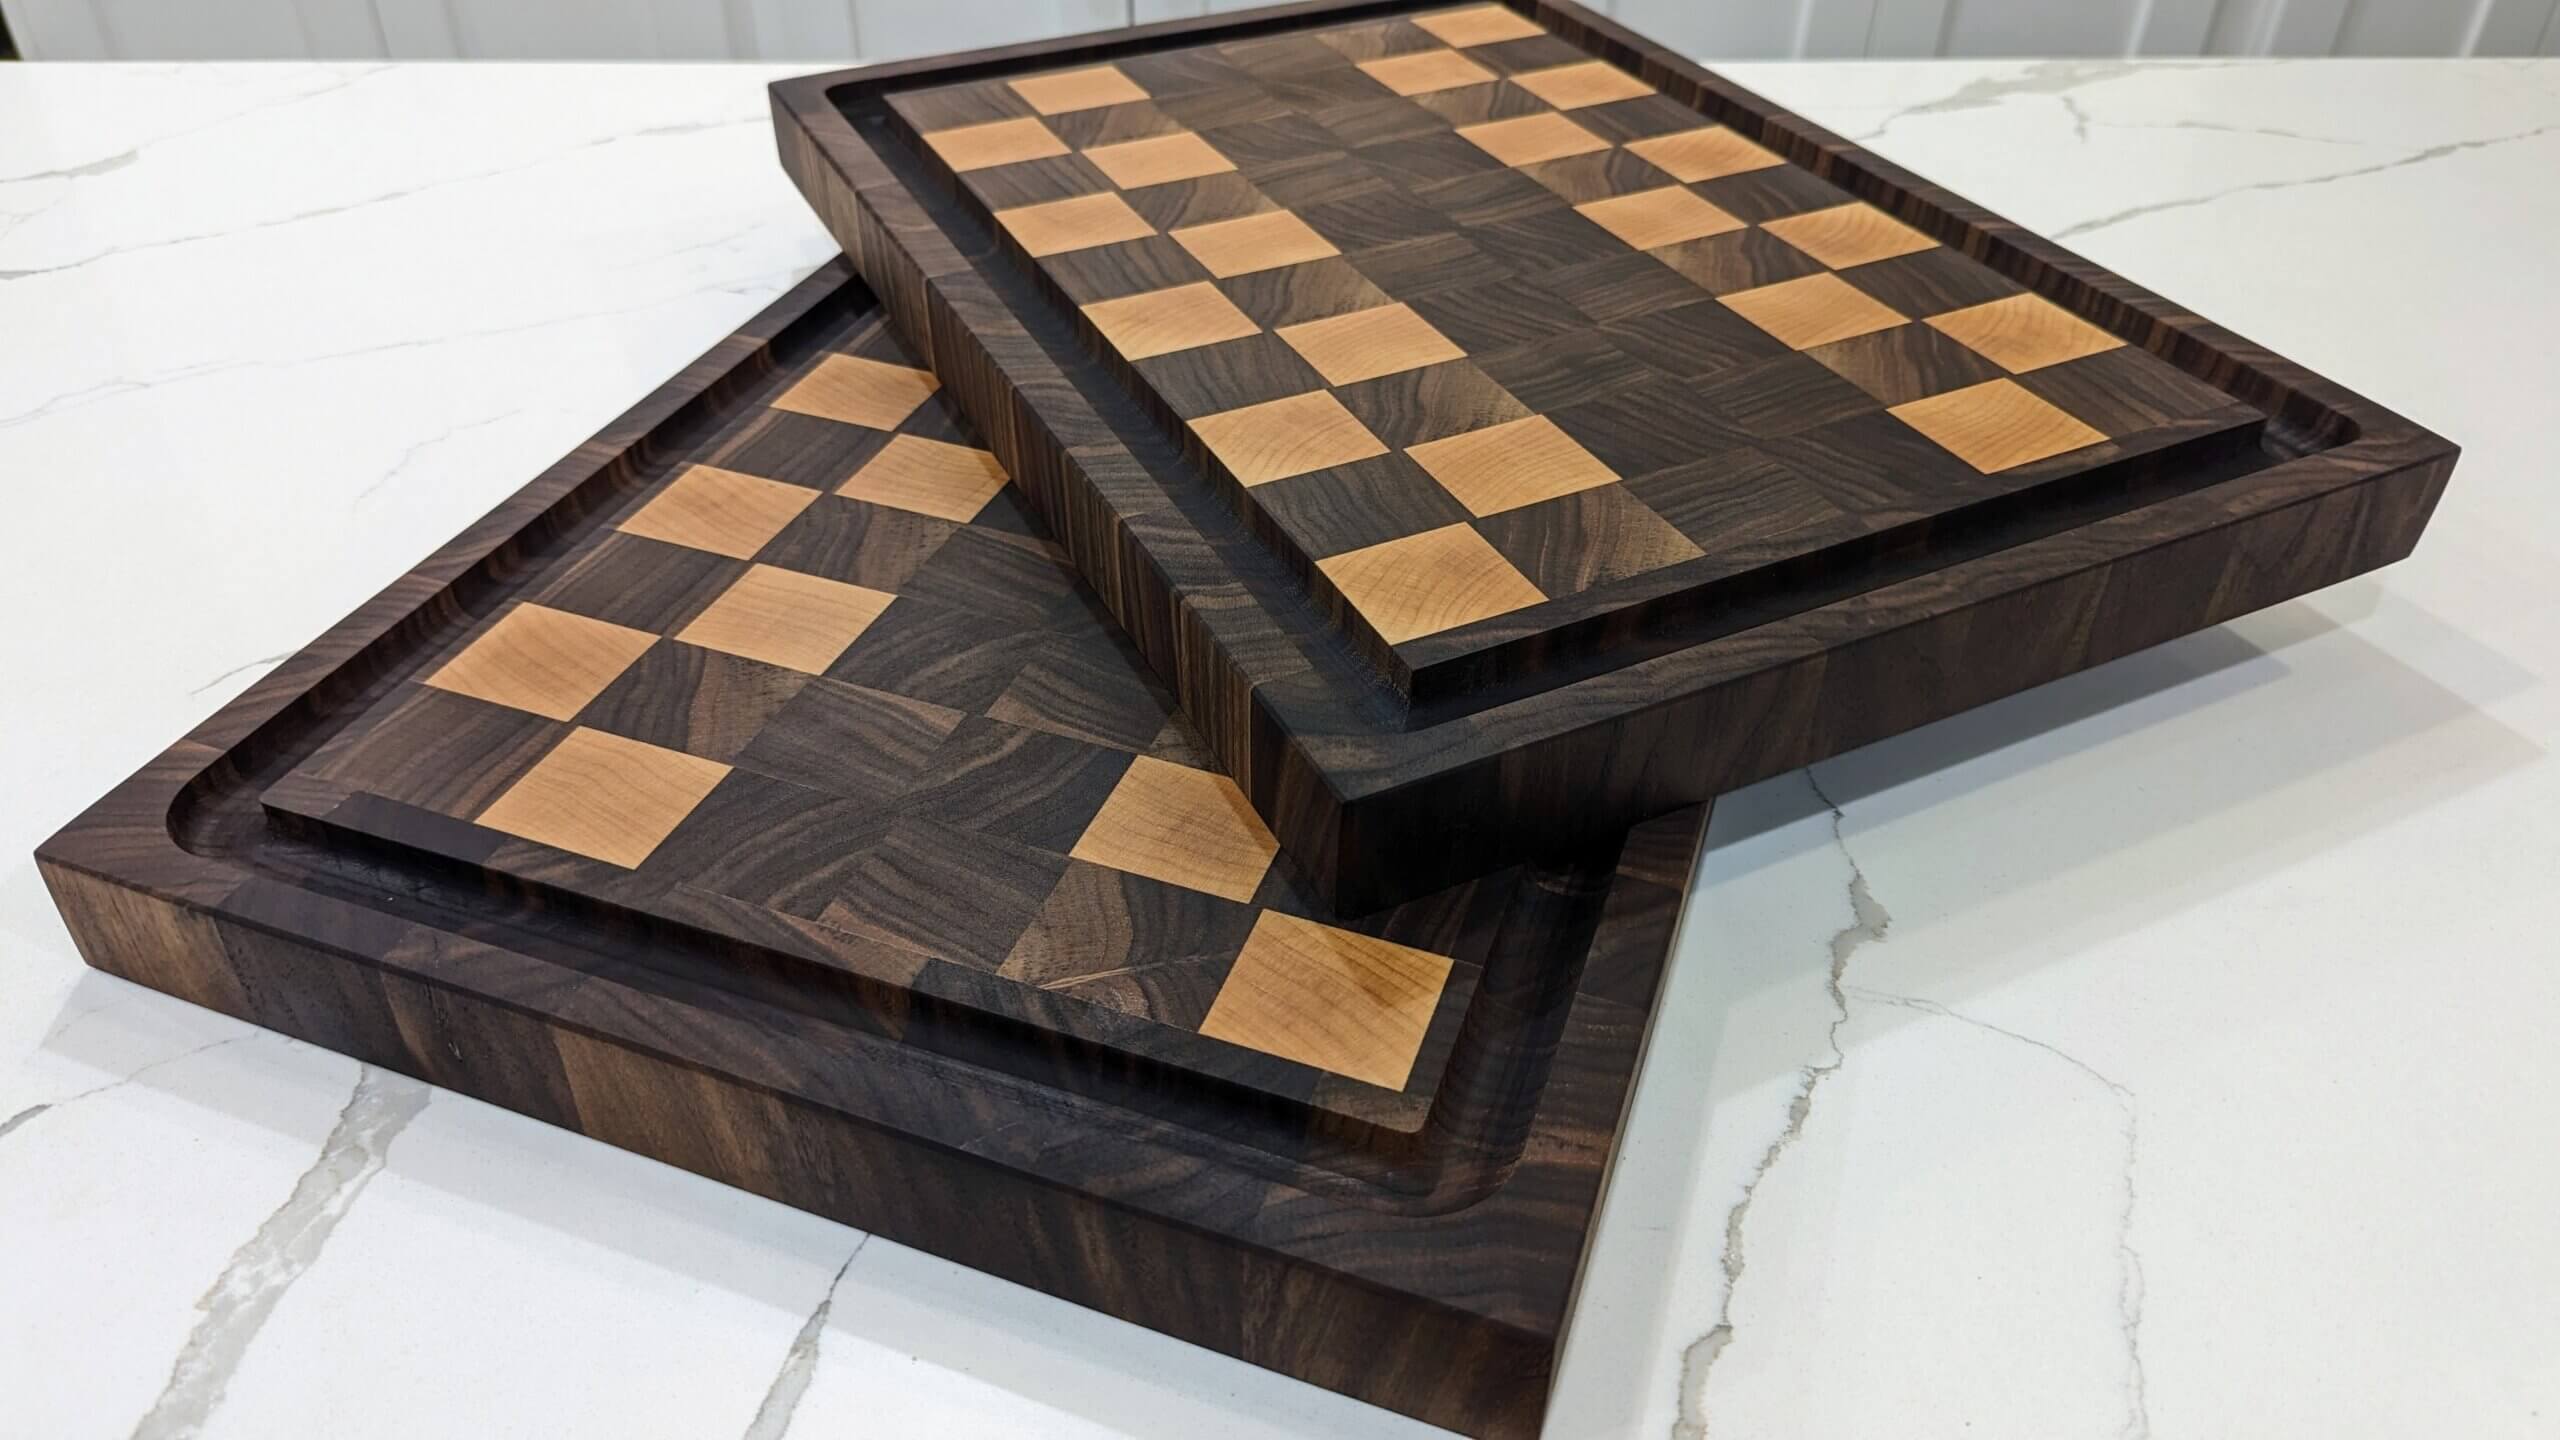 Small Cutting Board - Maple, Walnut, Mahogany, White Oak